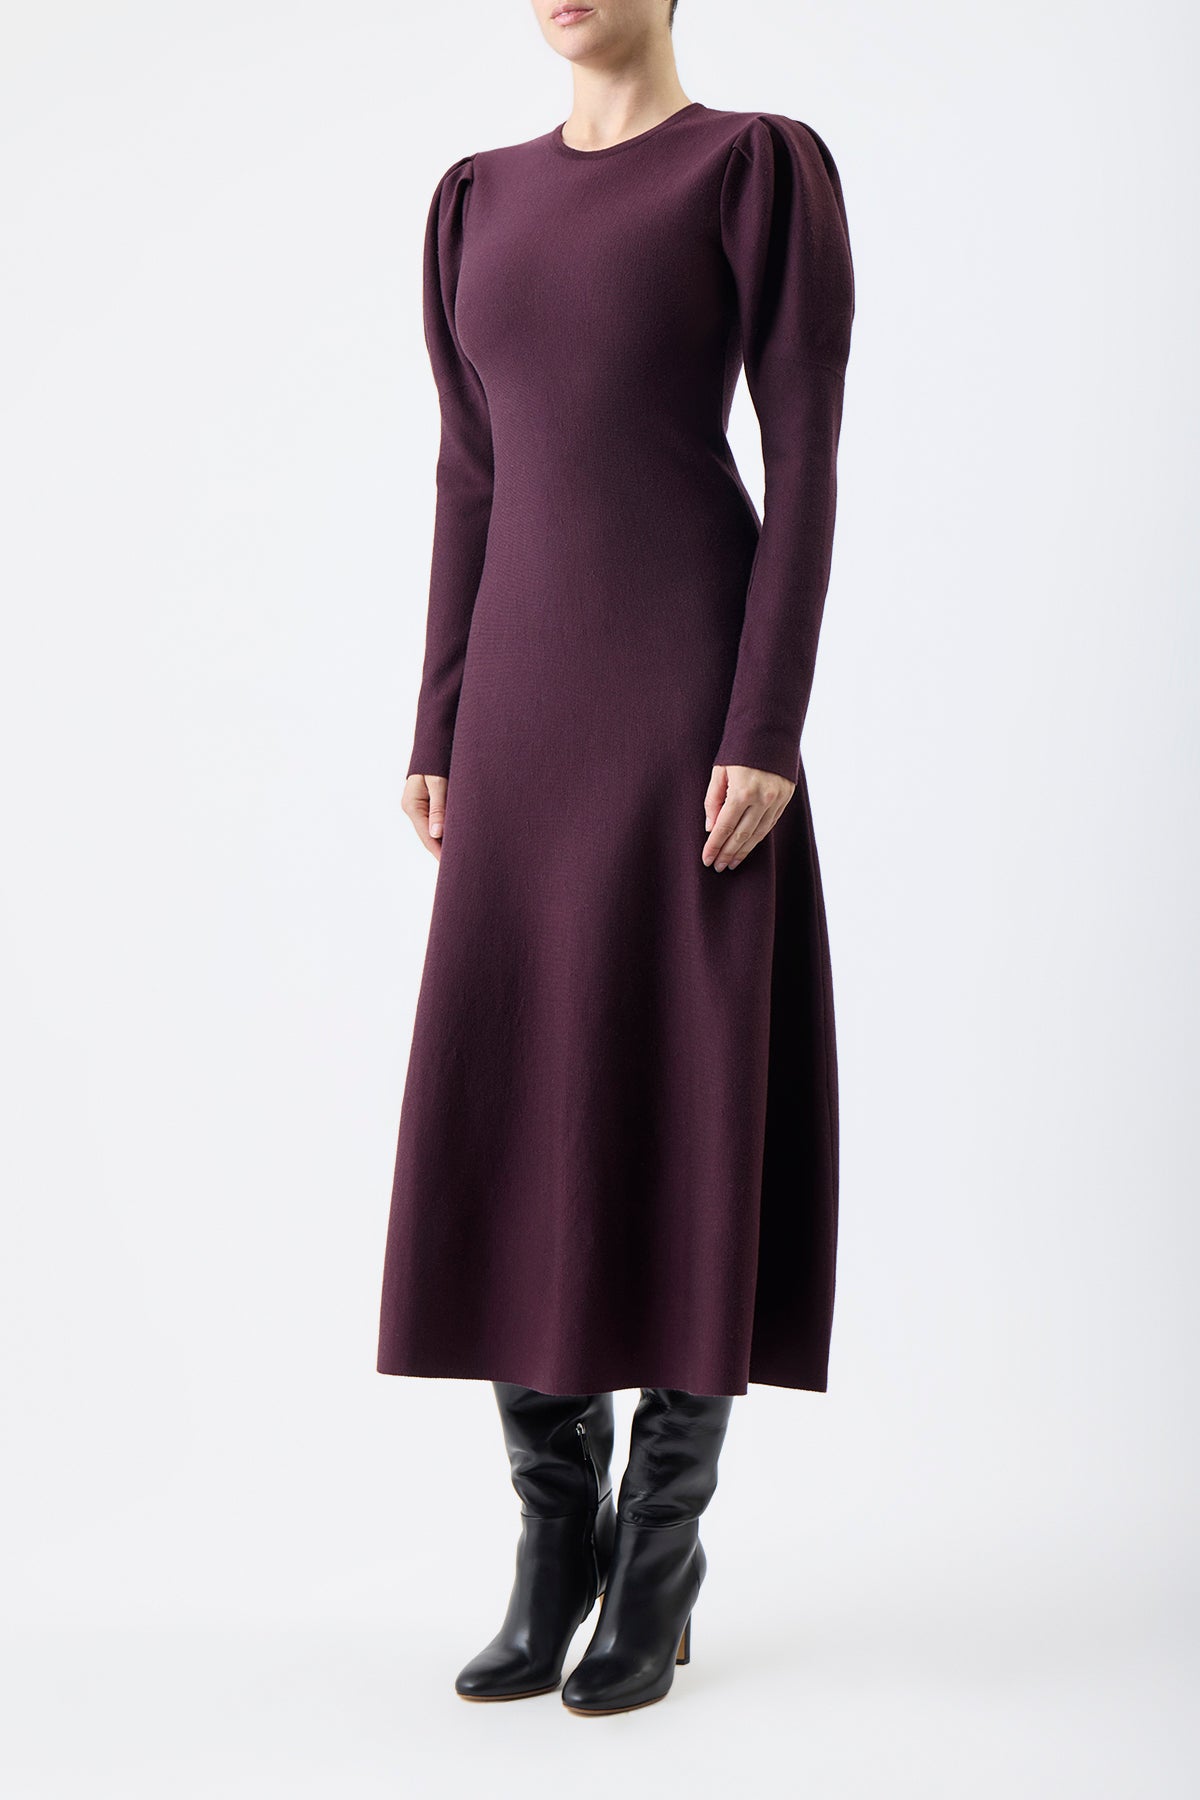 Hannah Dress in Cashmere Merino Wool